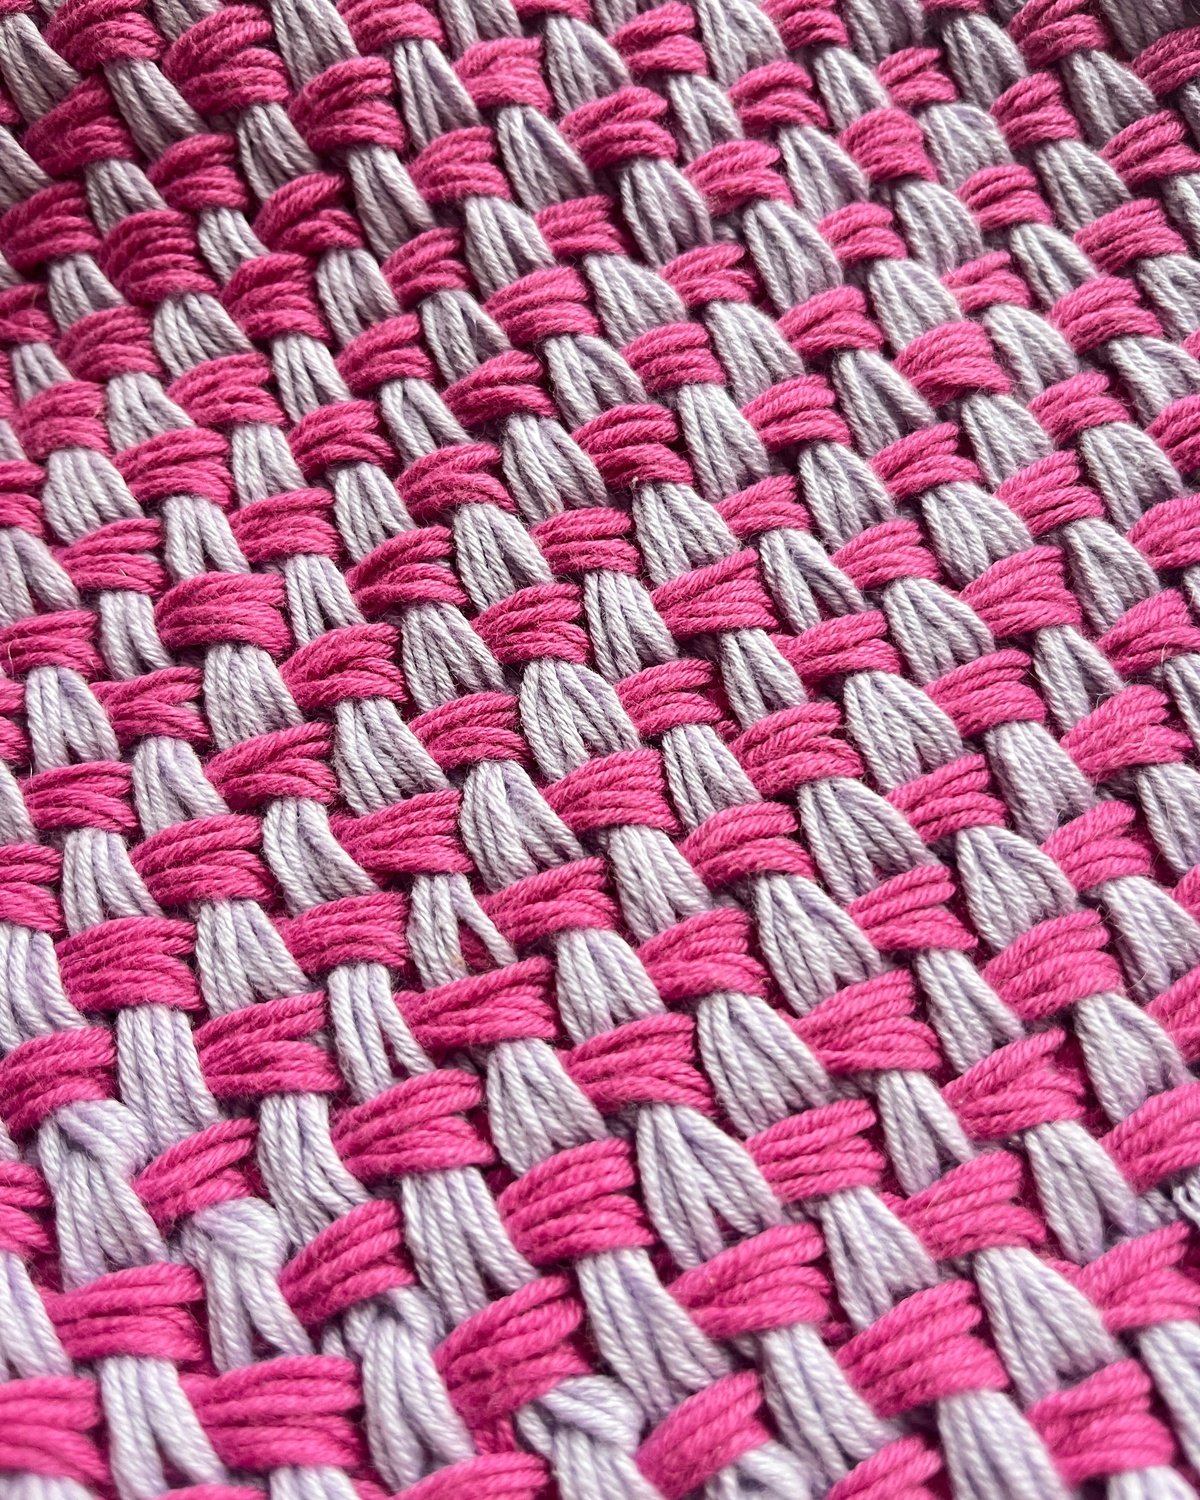 Coco Bag English Popknit knitting pattern